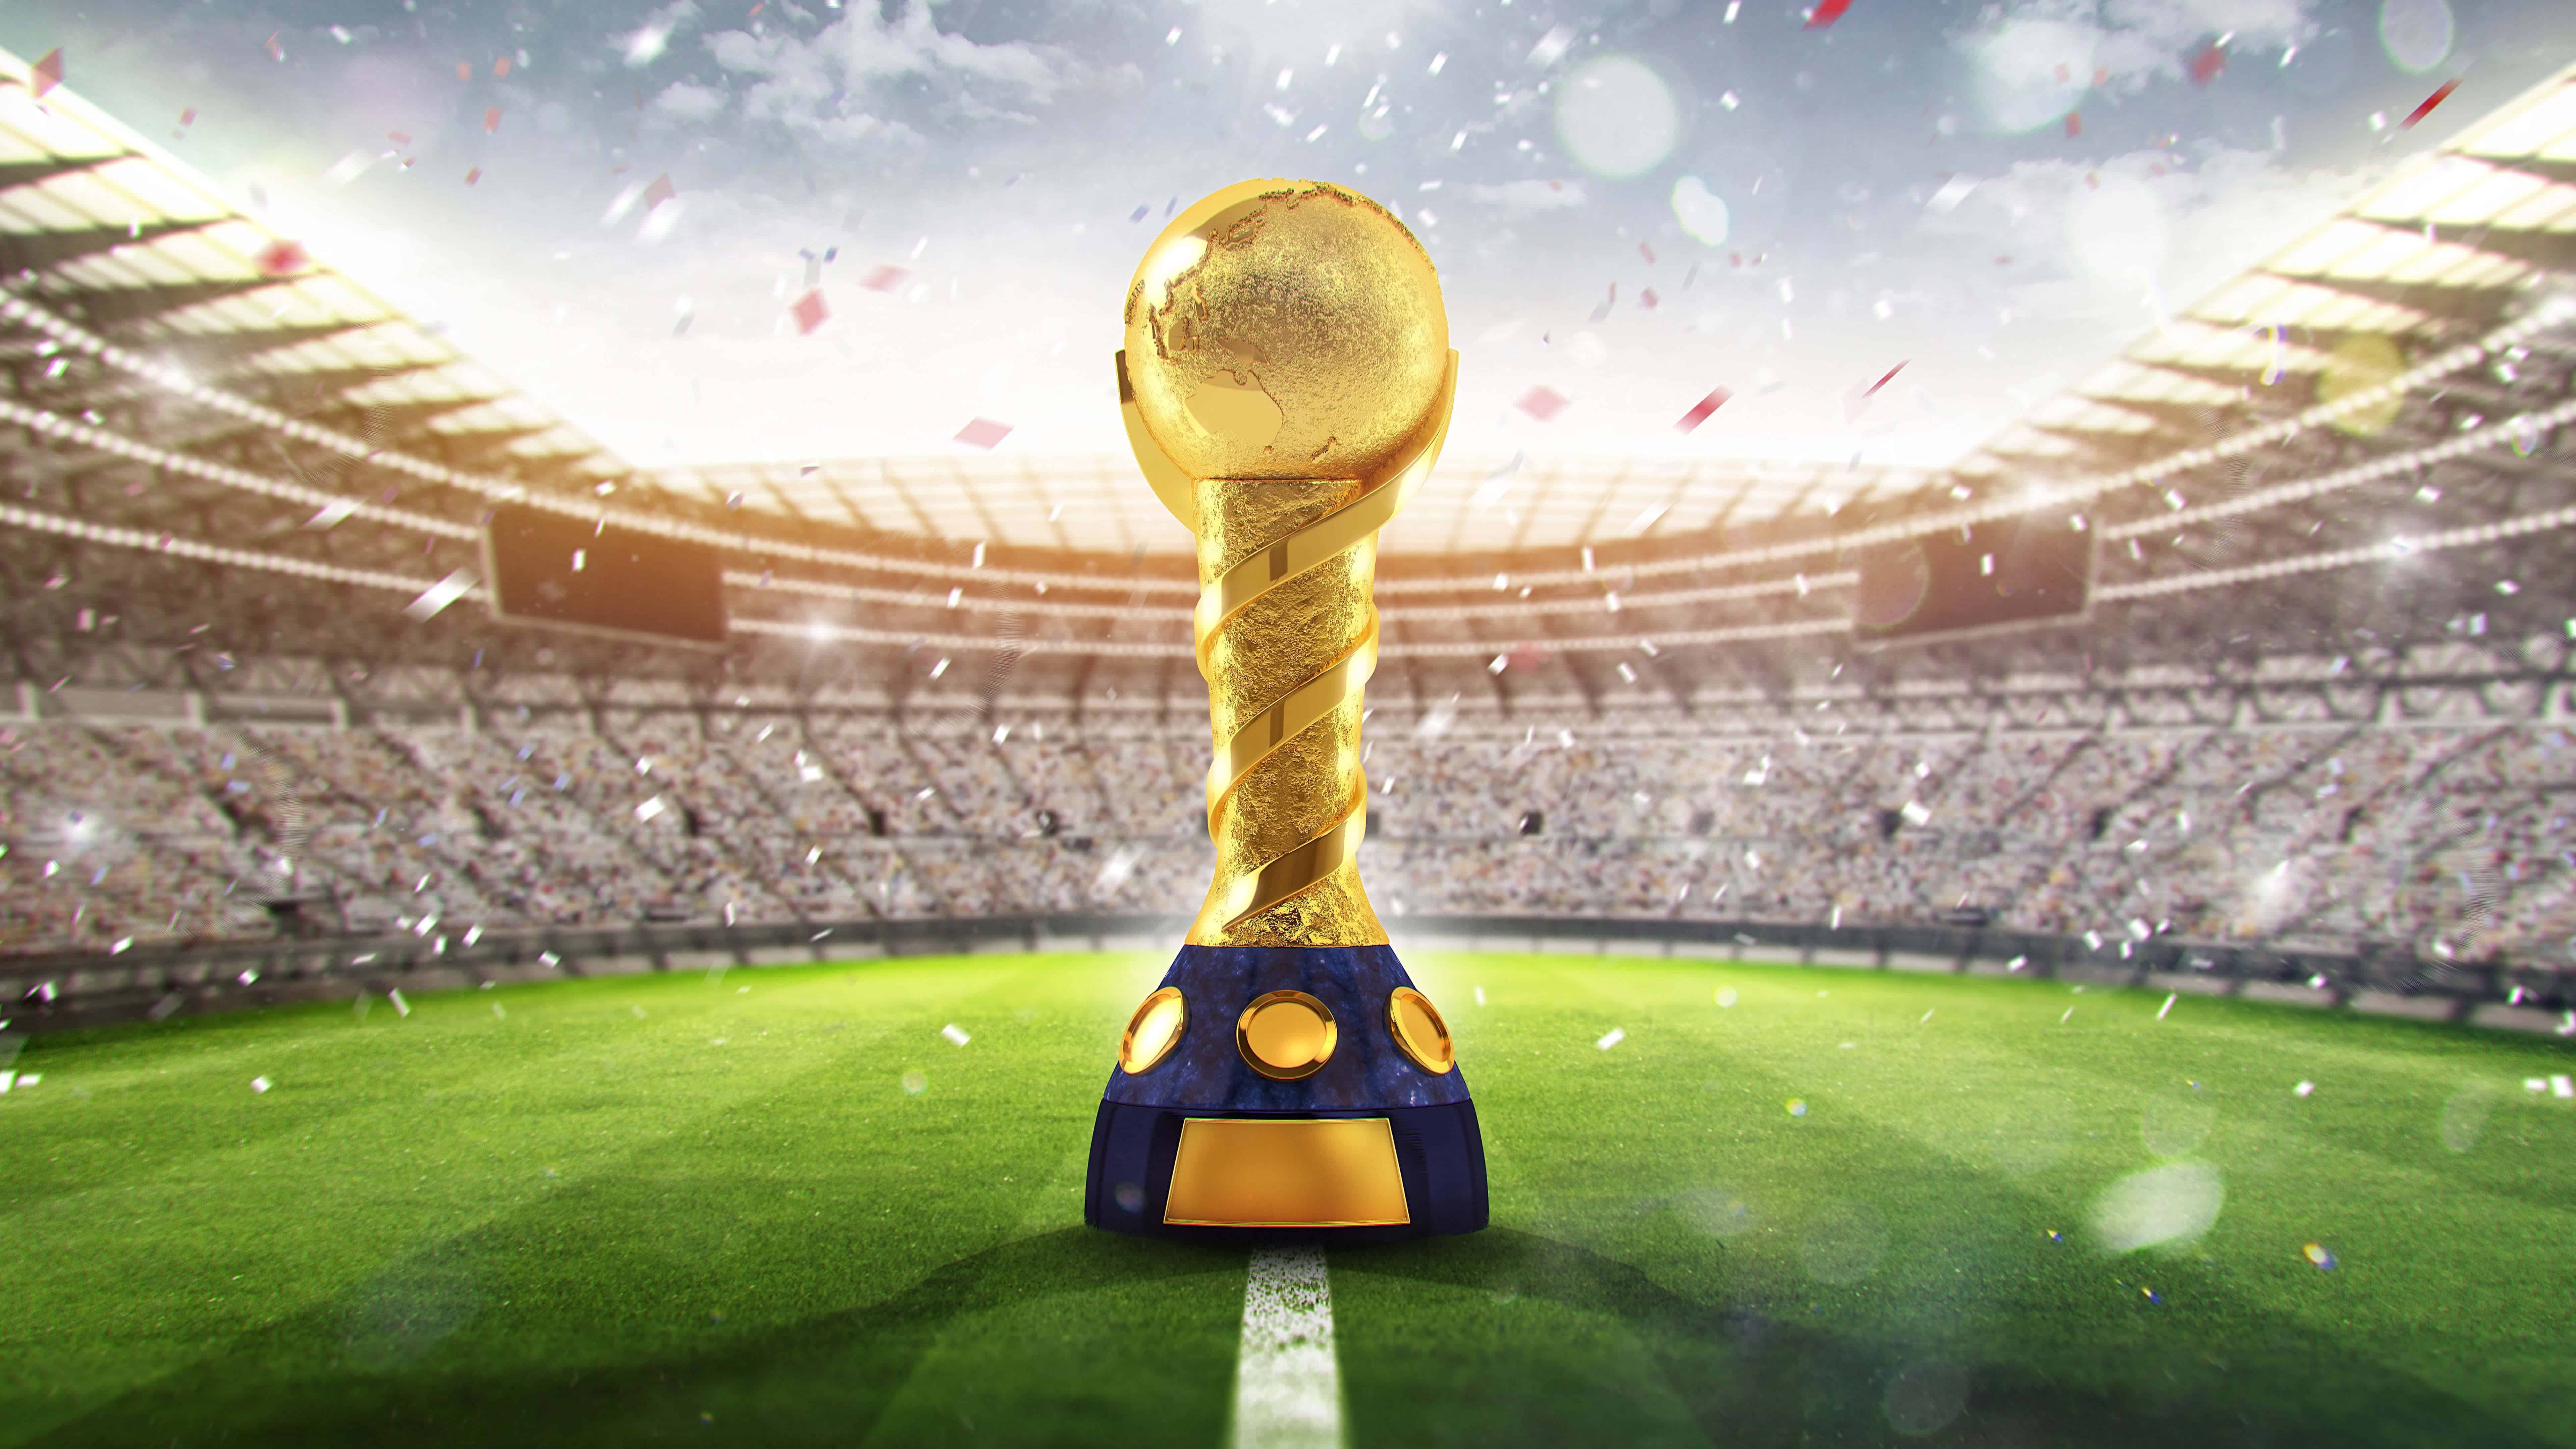 Fifa World Cup 2018 Russia Golden Trophy UHD 8K Wallpaper ...